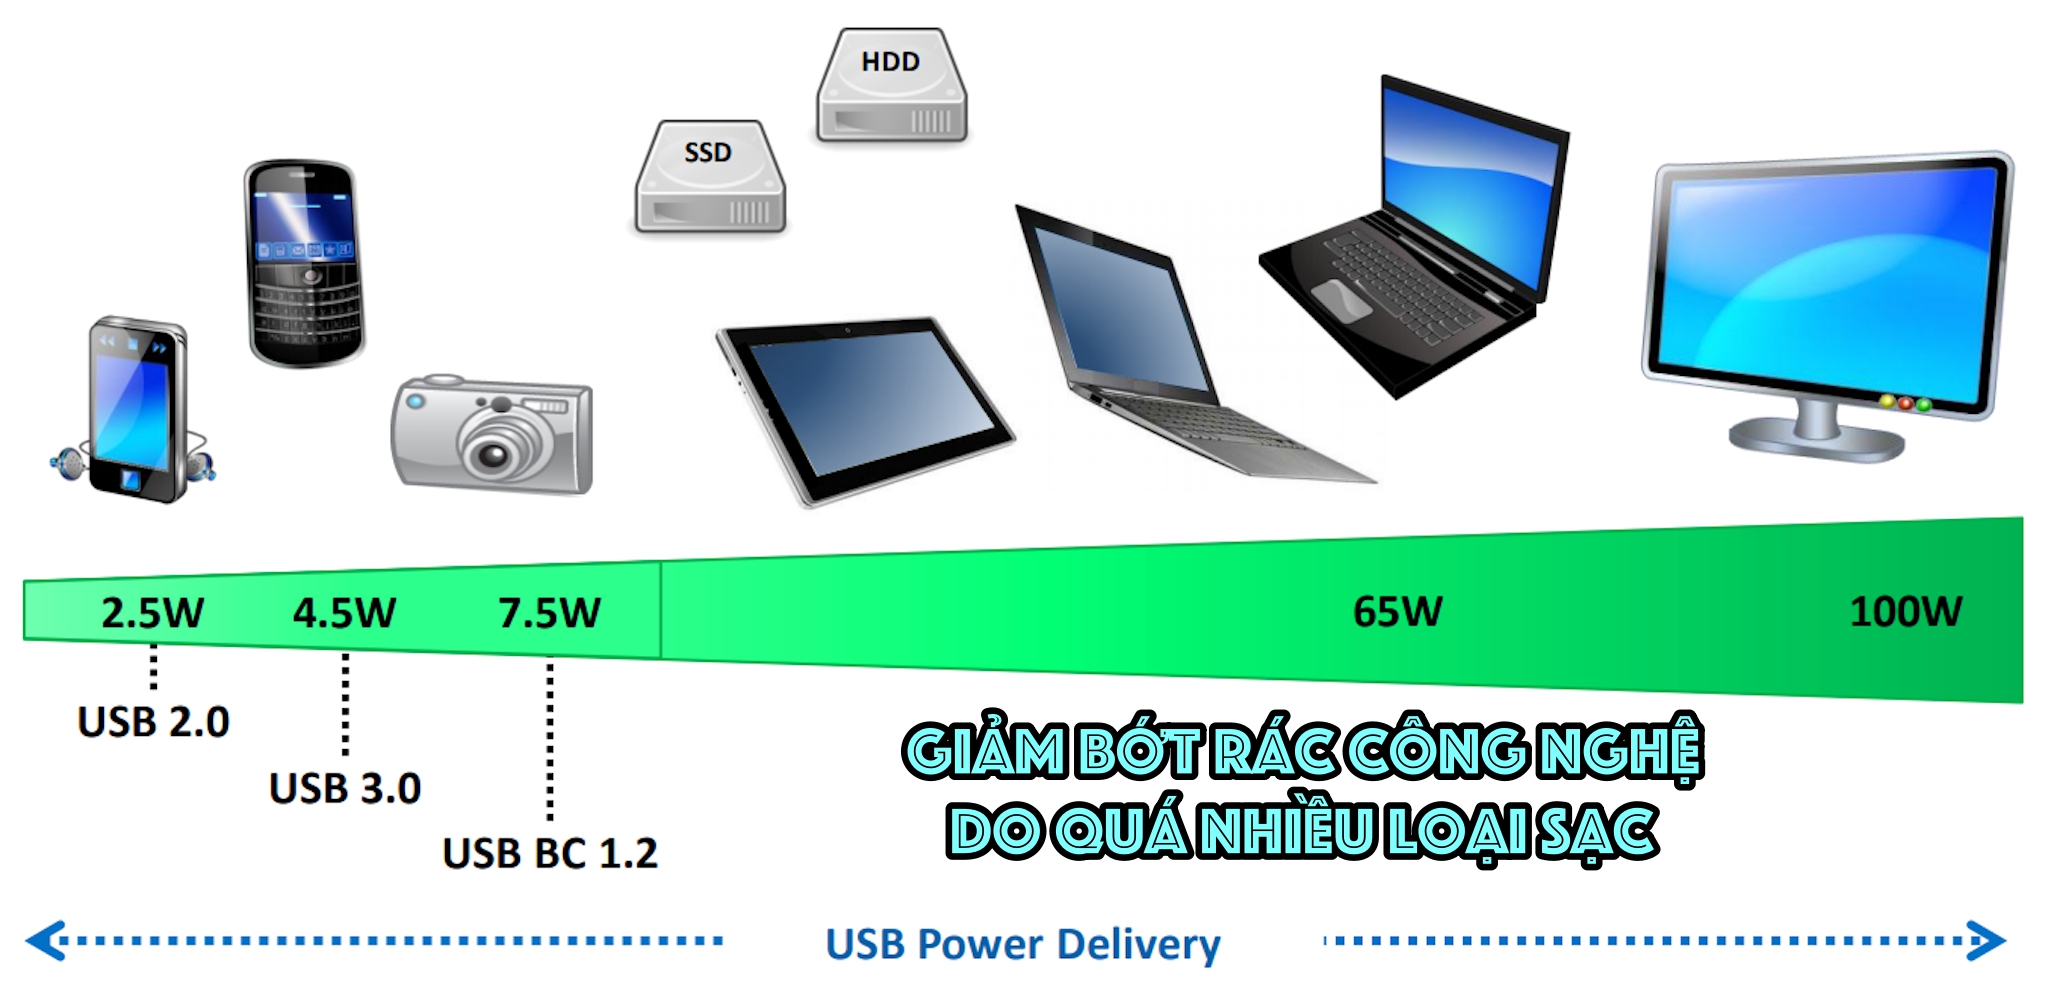 USB-Power-Delivery-100W.jpg